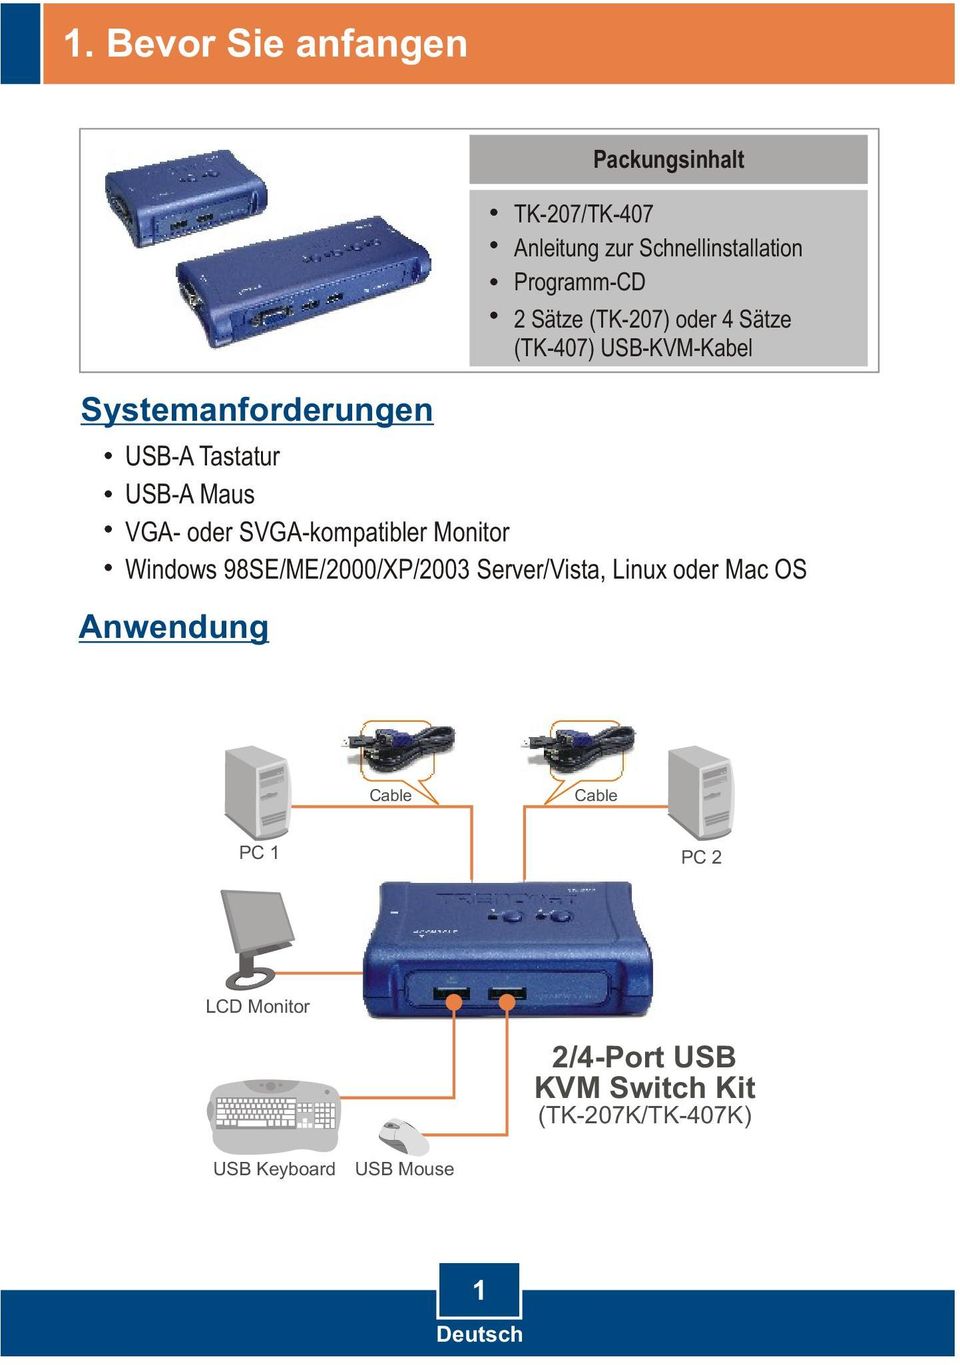 USB-A Maus VGA- oder SVGA-kompatibler Monitor Windows 98SE/ME/2000/XP/2003 Server/Vista, Linux oder Mac